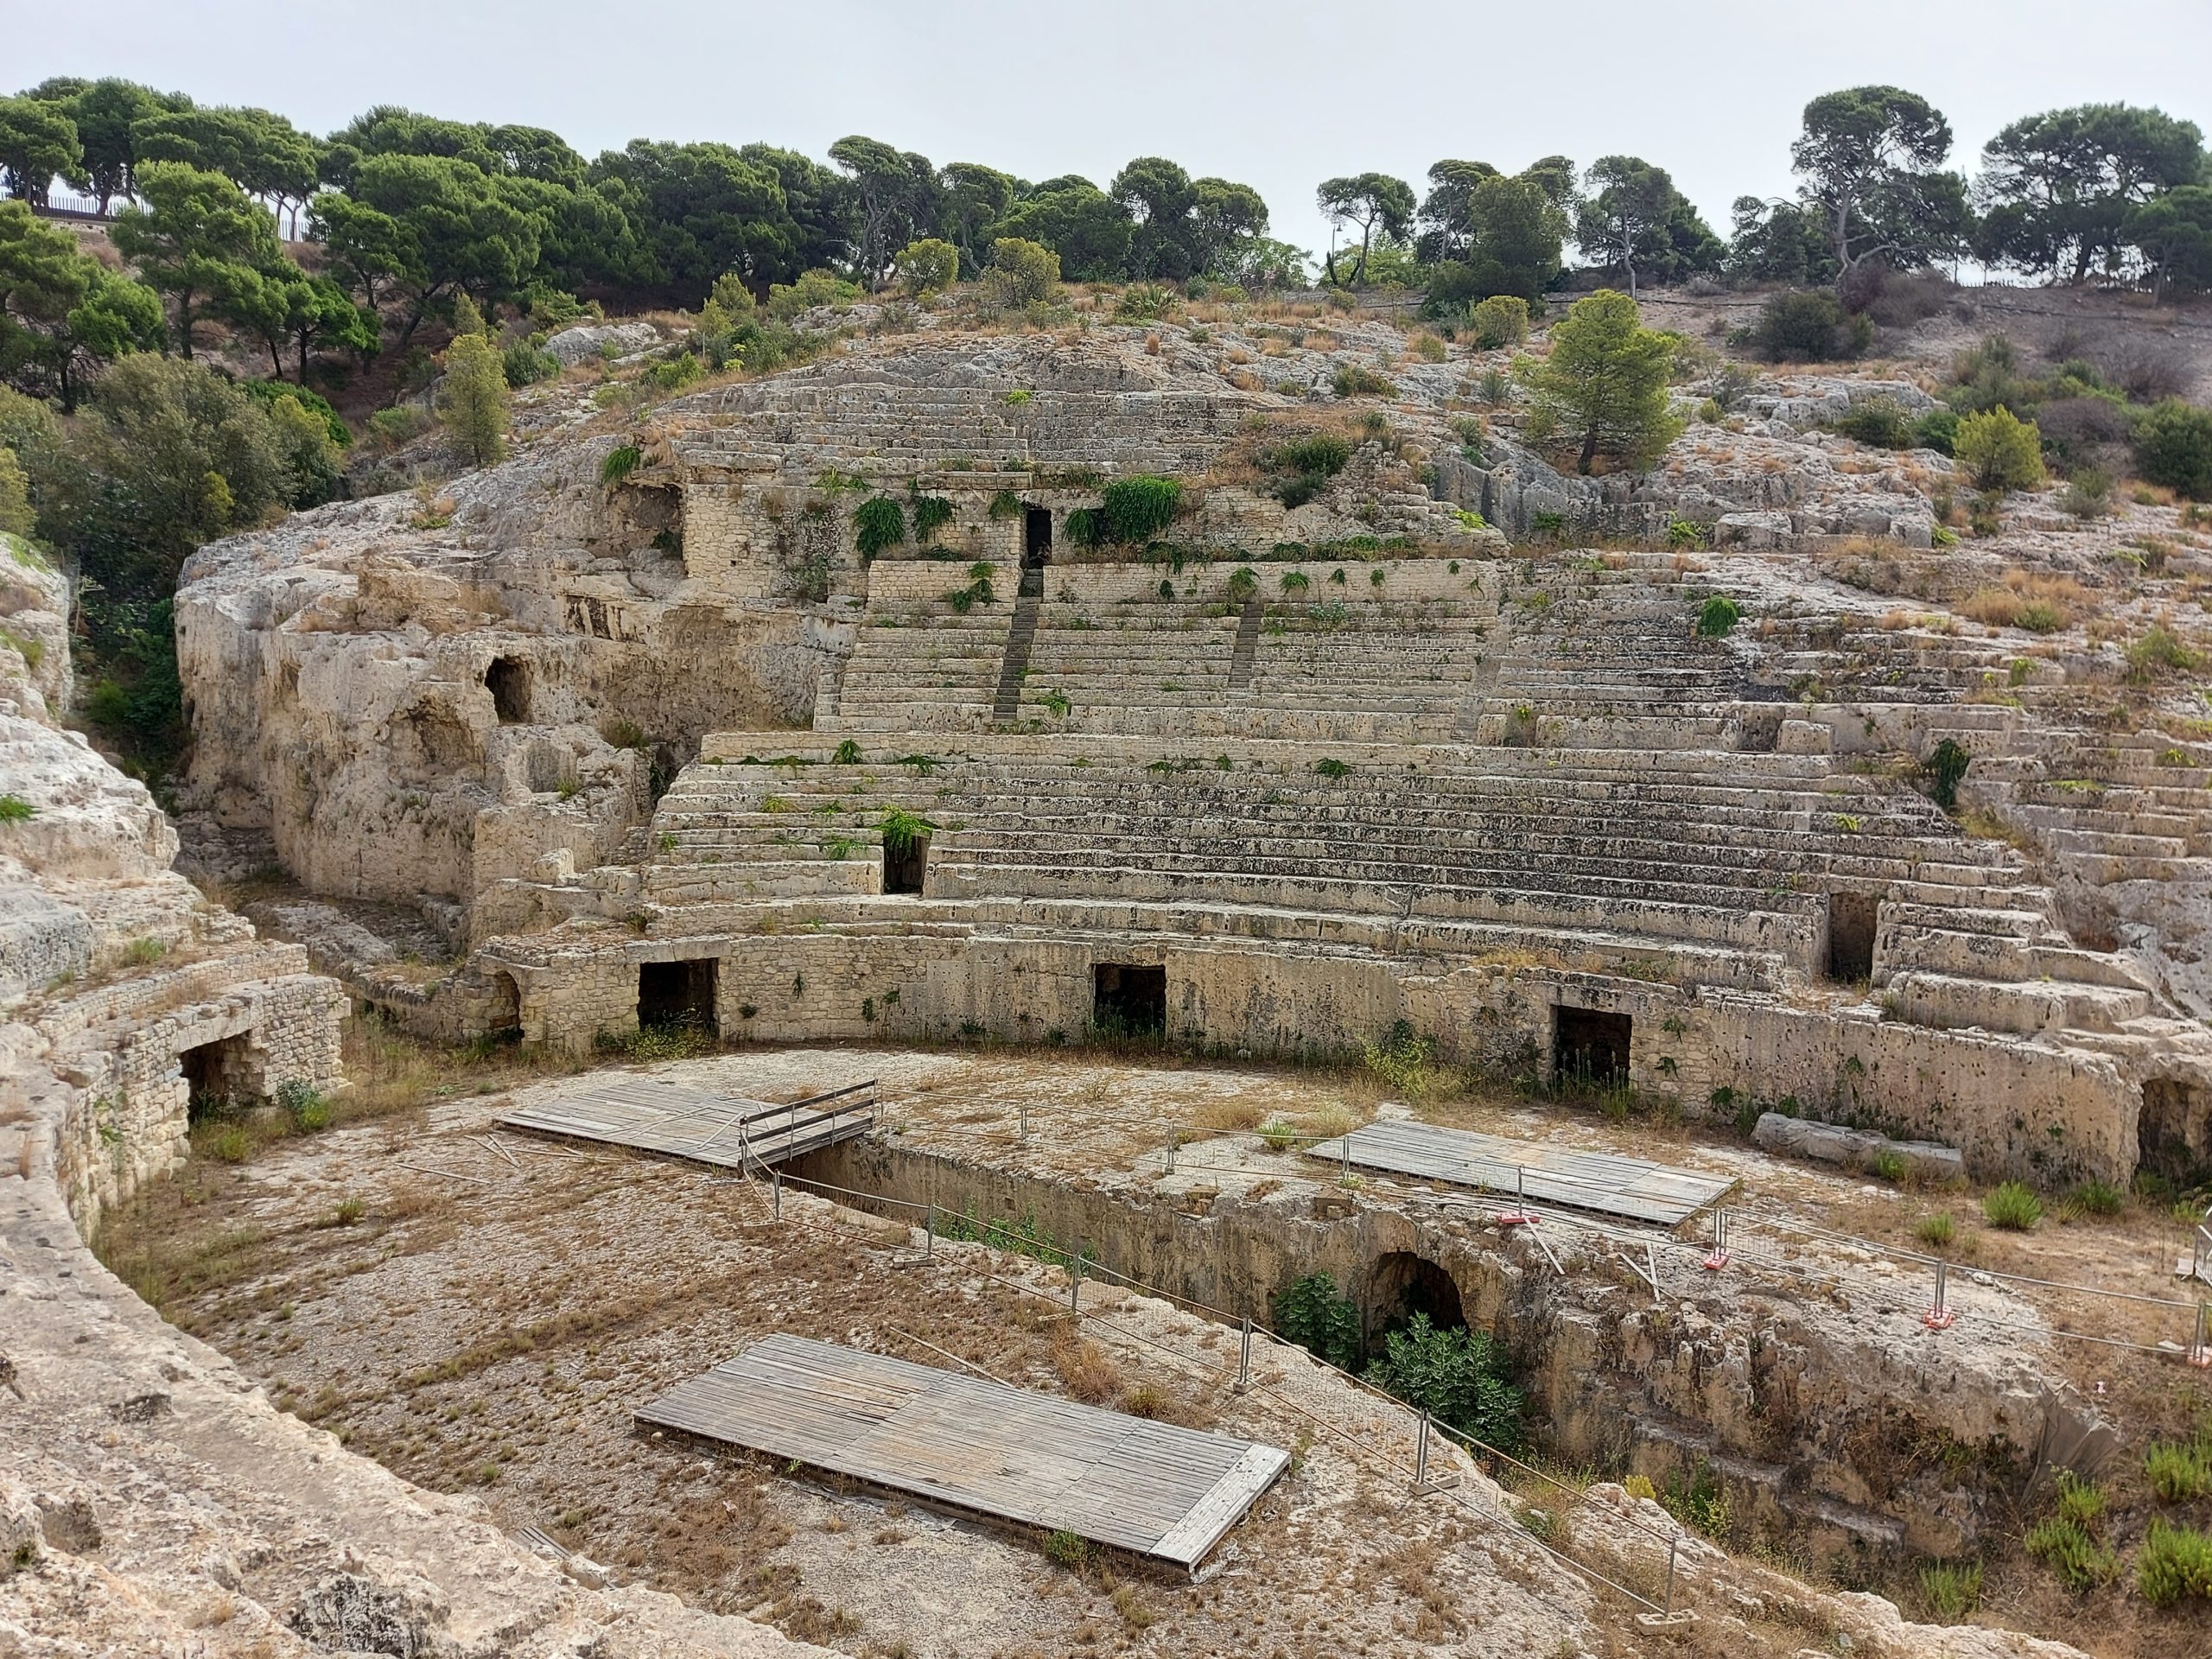 Cagliari Ancient Roman Theatre, Italy / Kimberly Sullivan